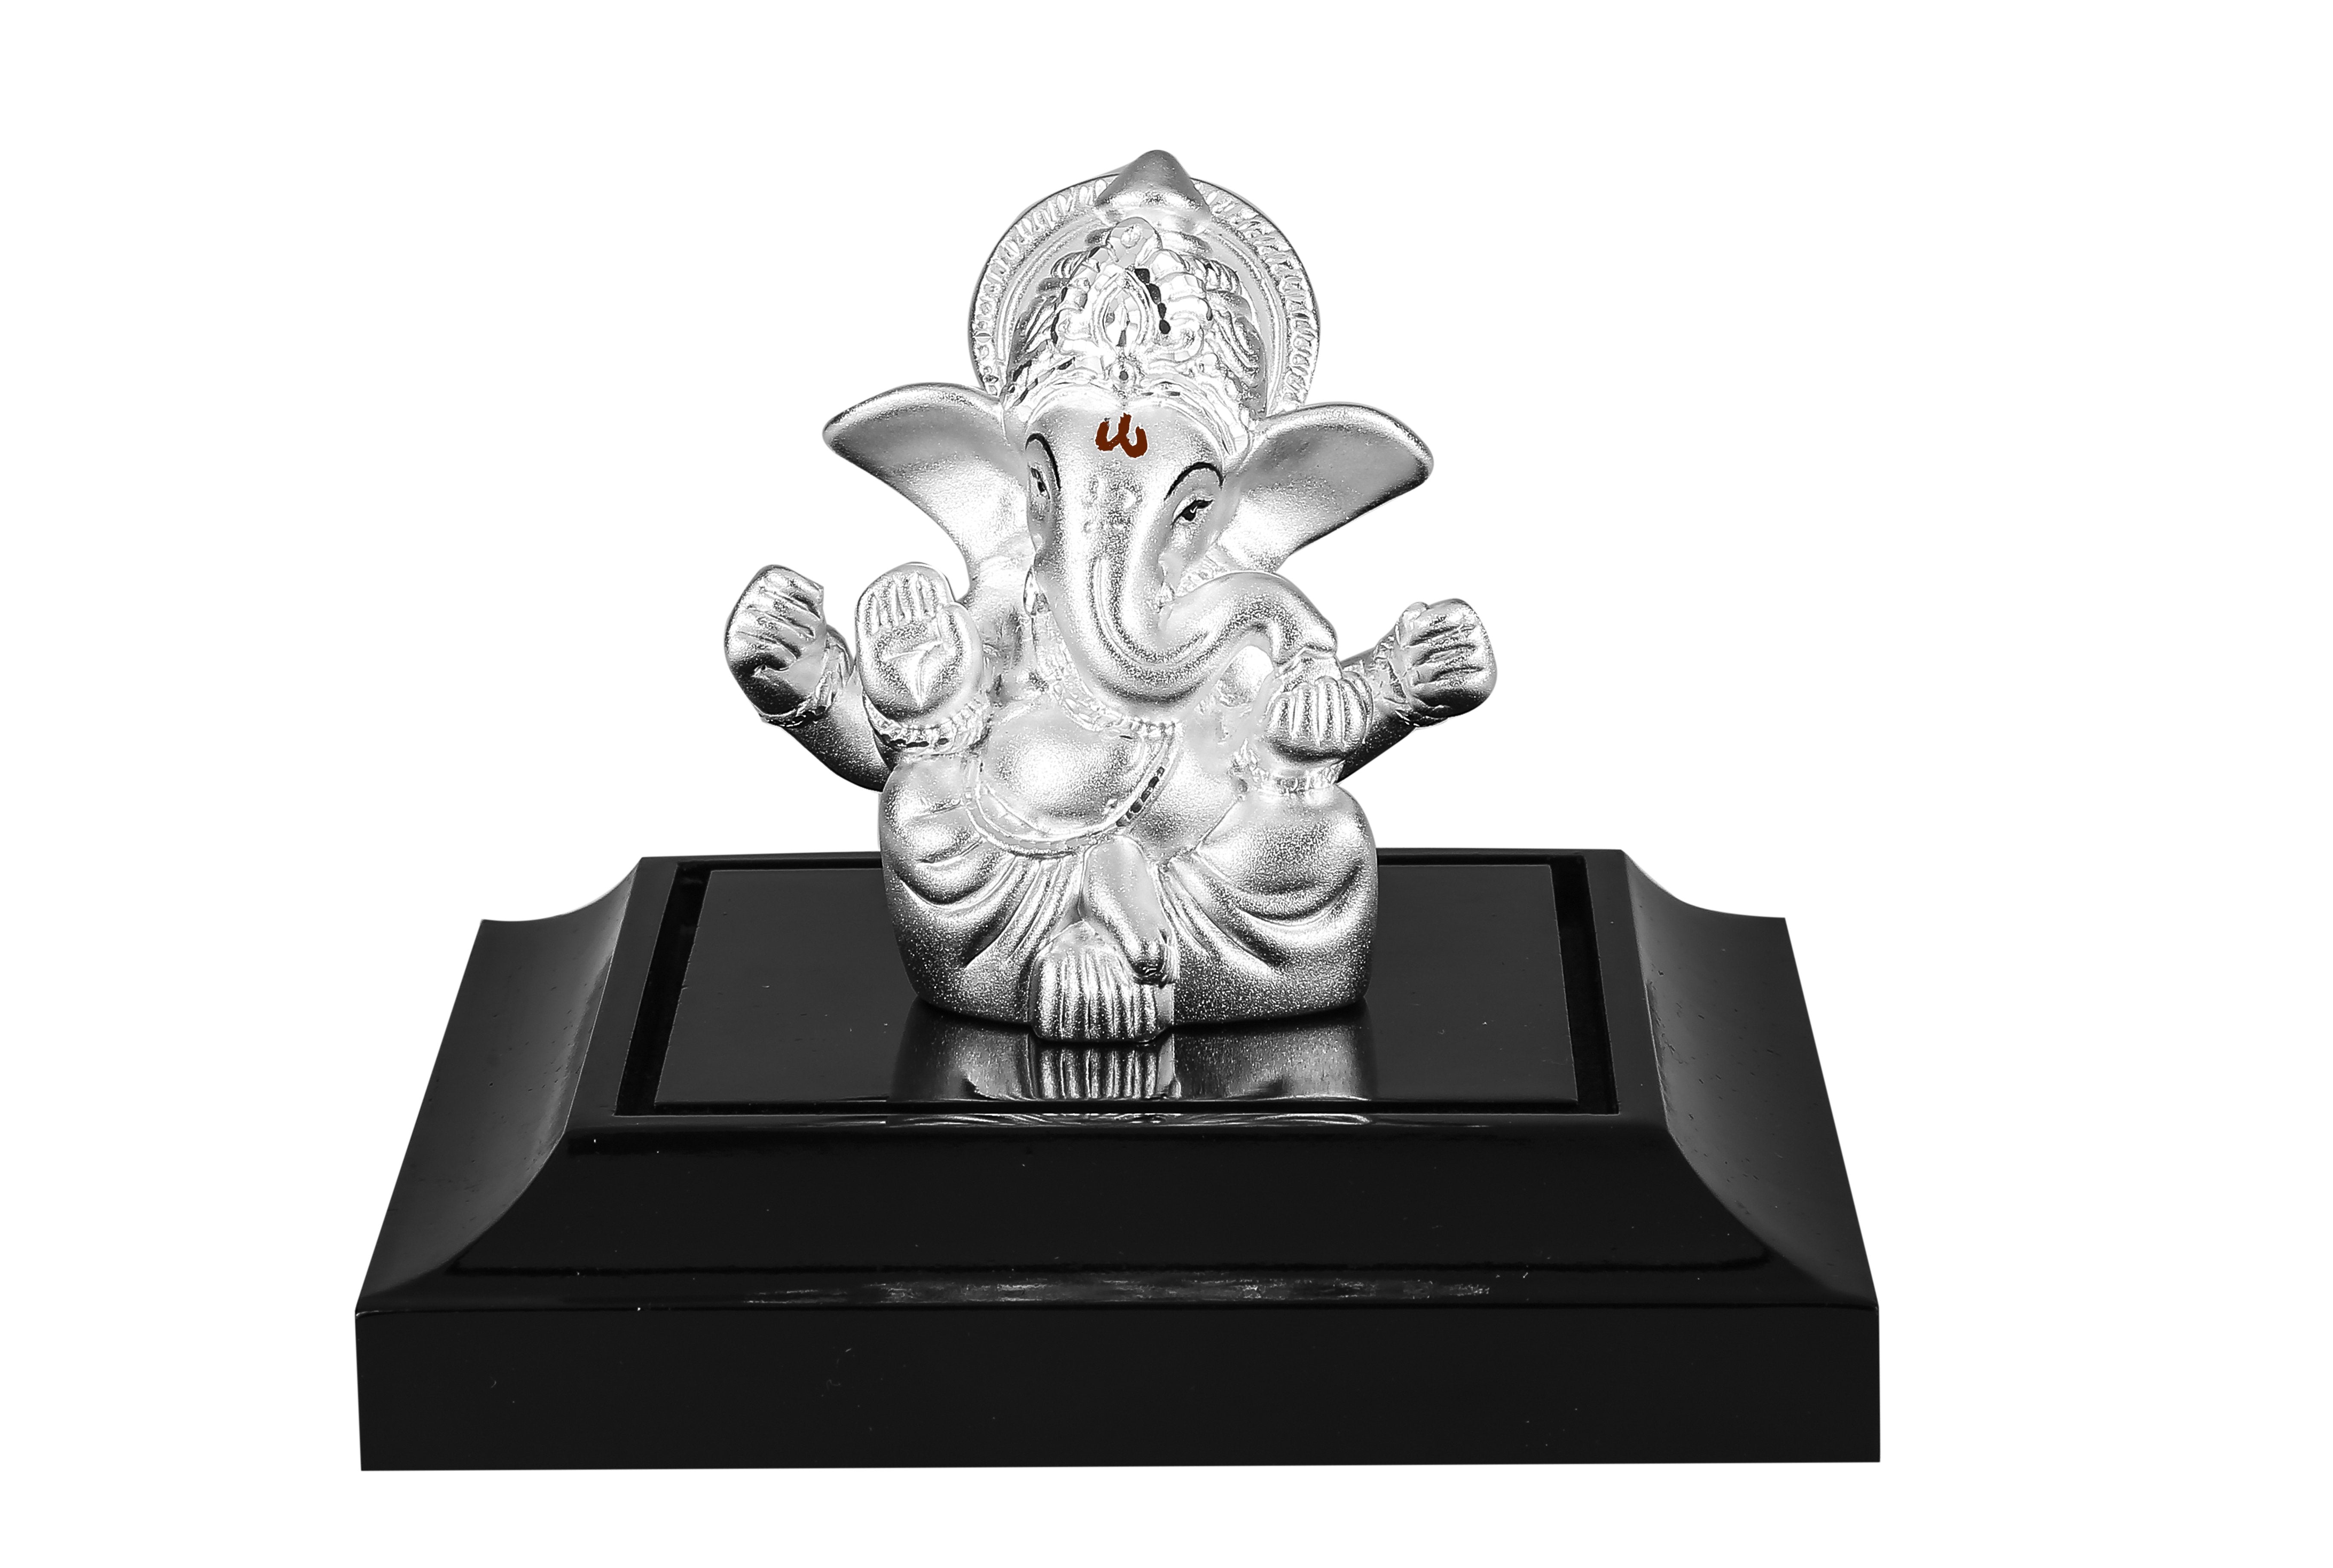 999 Pure Silver Ganesha Idol By Krysaliis Isvara - Krign_12 Idols